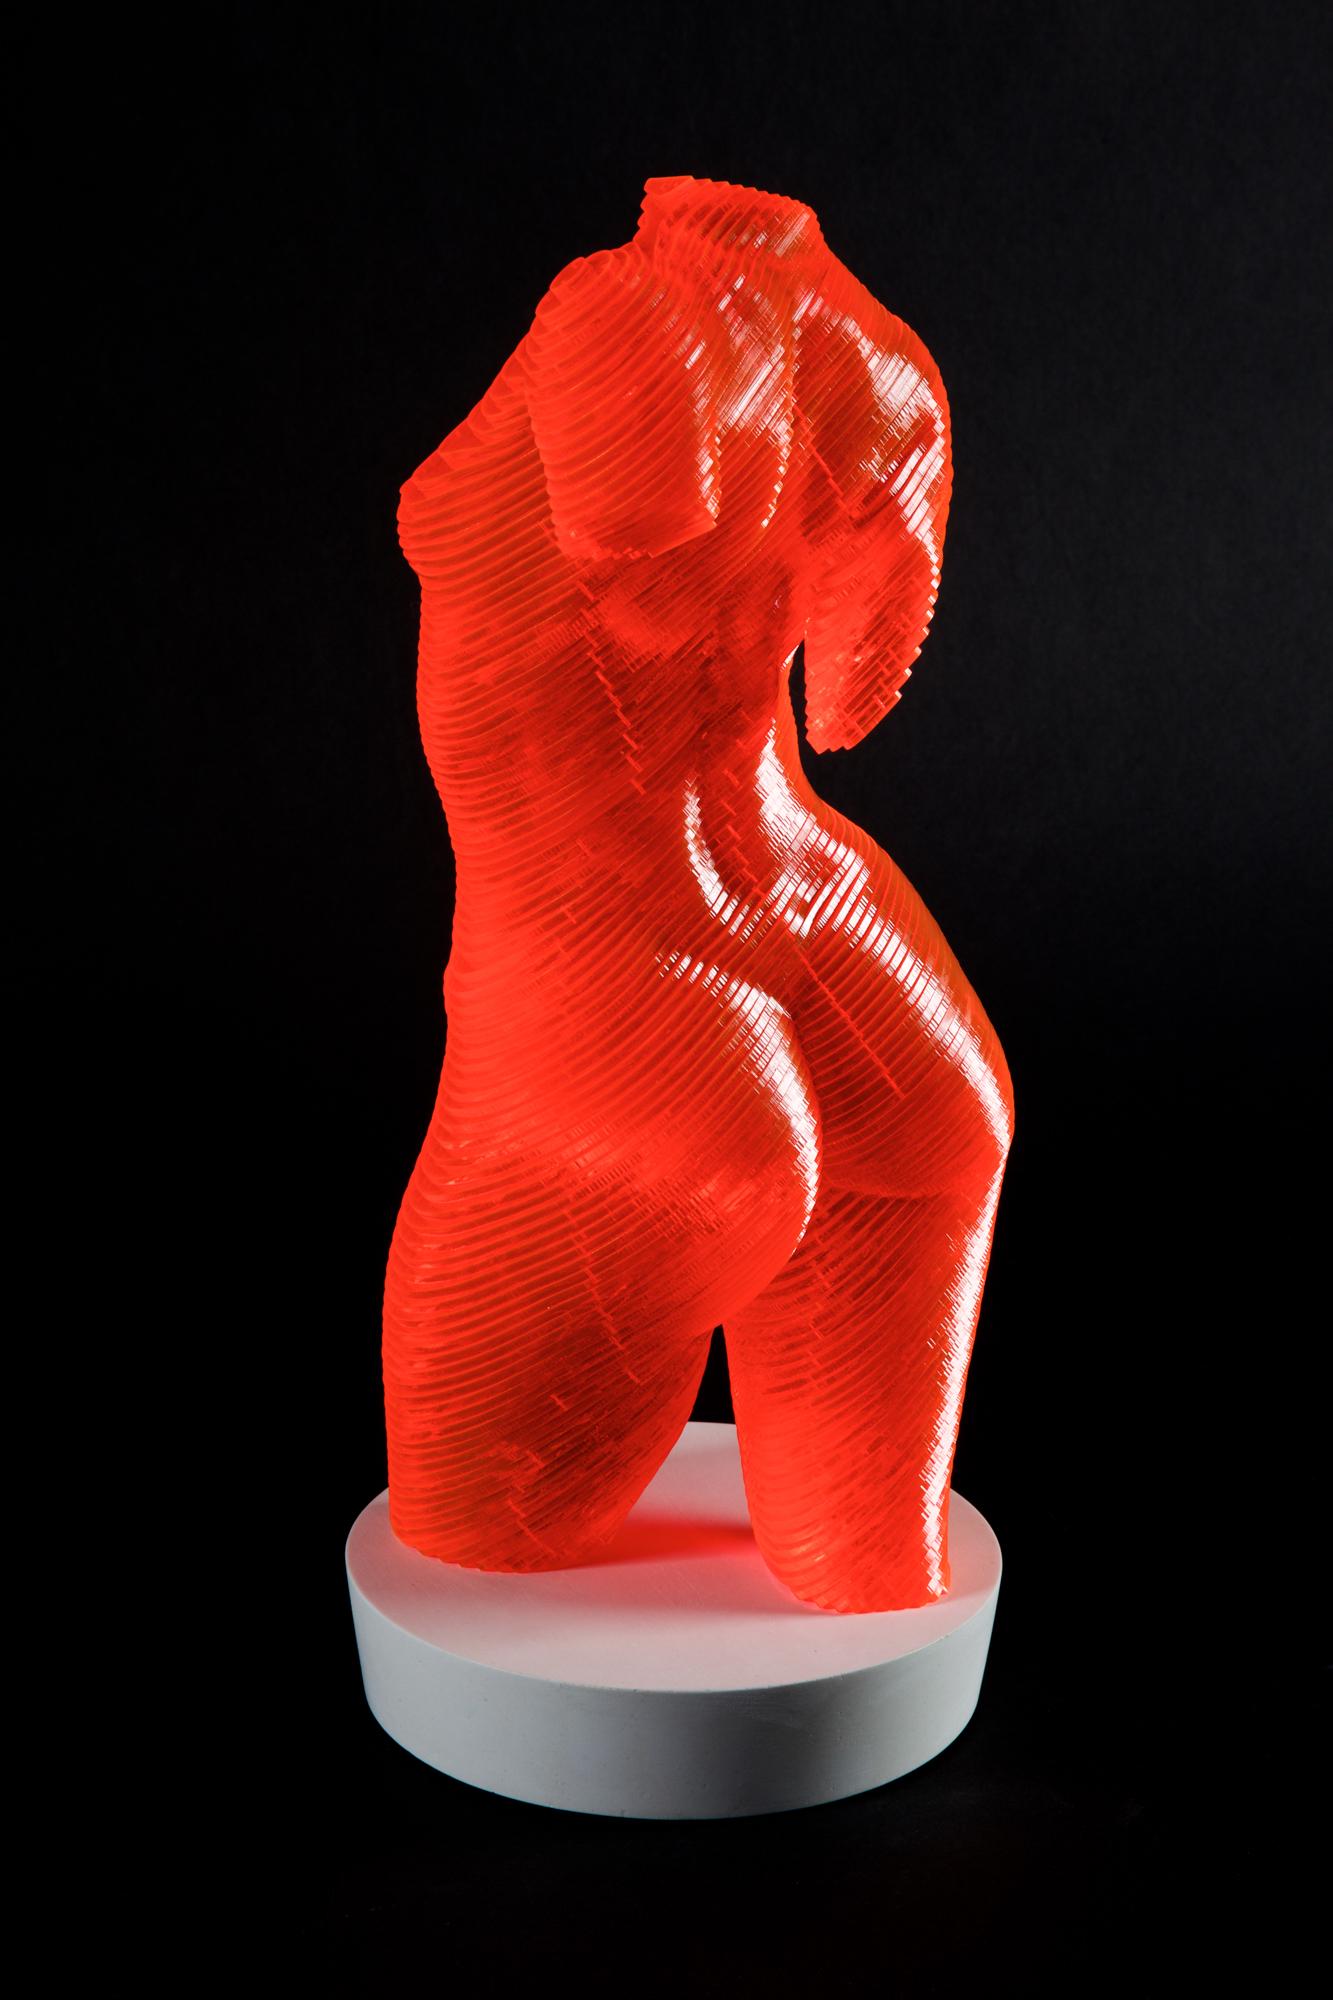 Olivier Duhamel Nude Sculpture - Roxie..Contemporary plexiglass sculpture, nude female, suitable outdoor display 